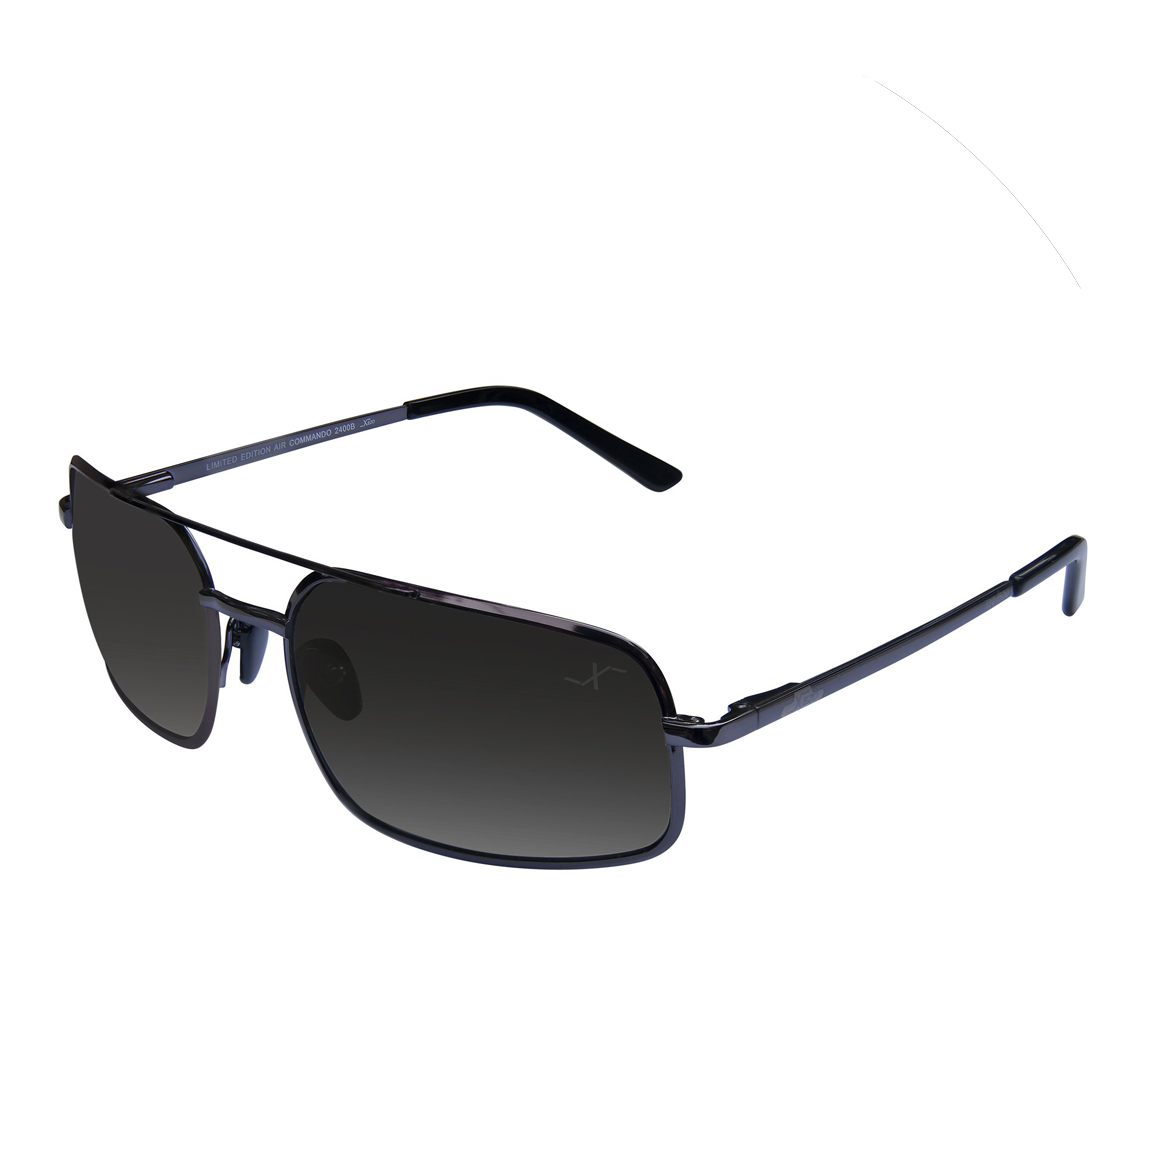 A pair of Xezo sunglasses